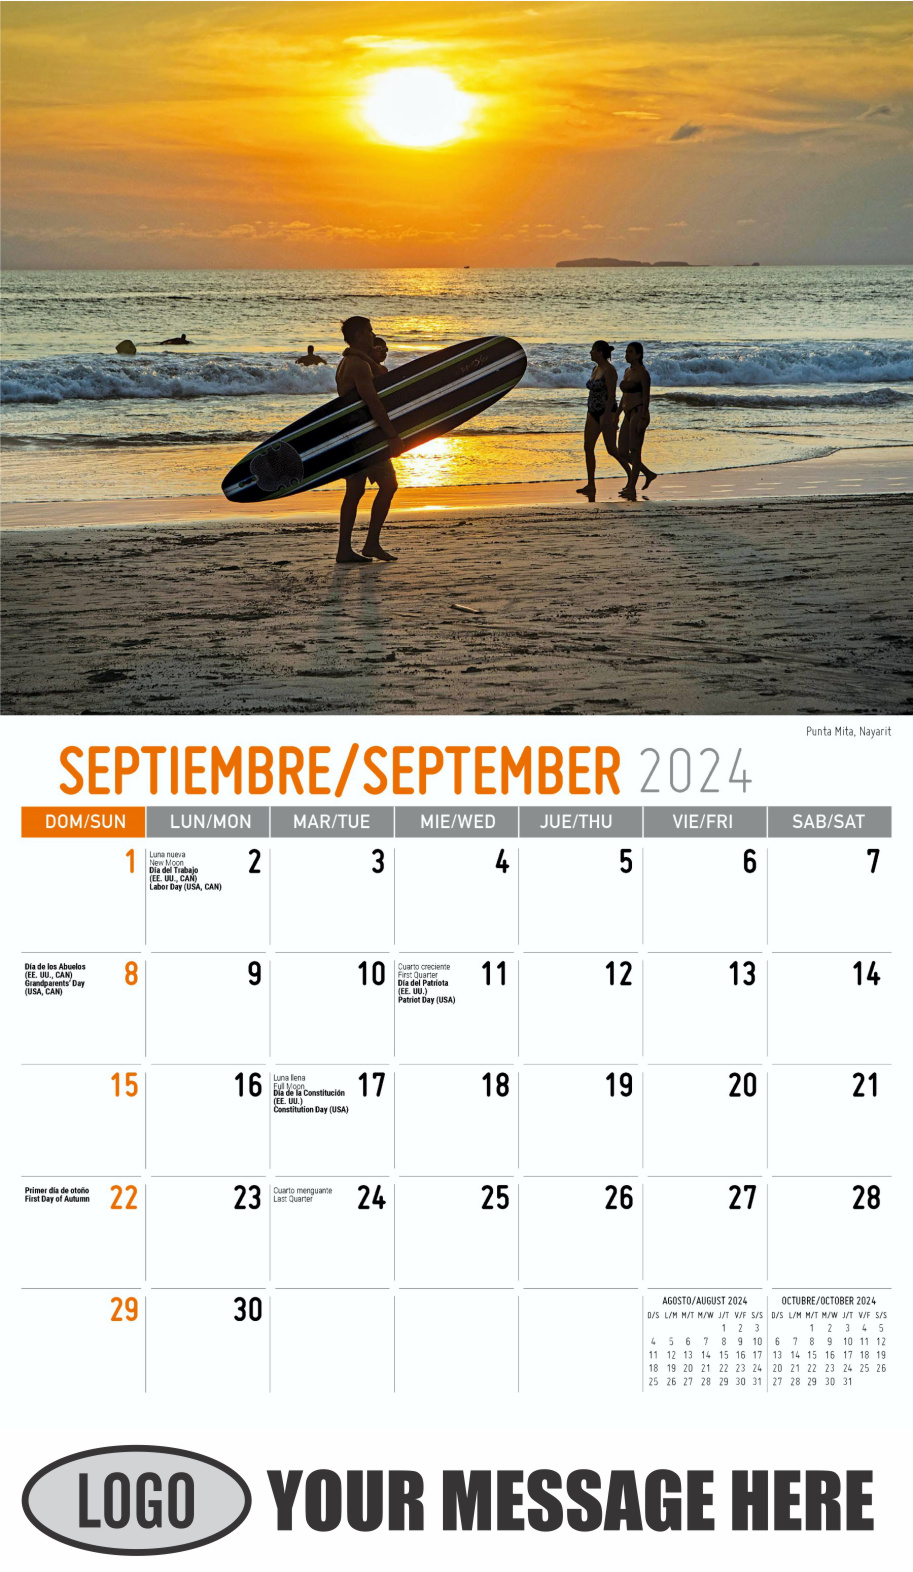 Scenes of Mexico 2024 Bilingual Business Promo Calendar - September